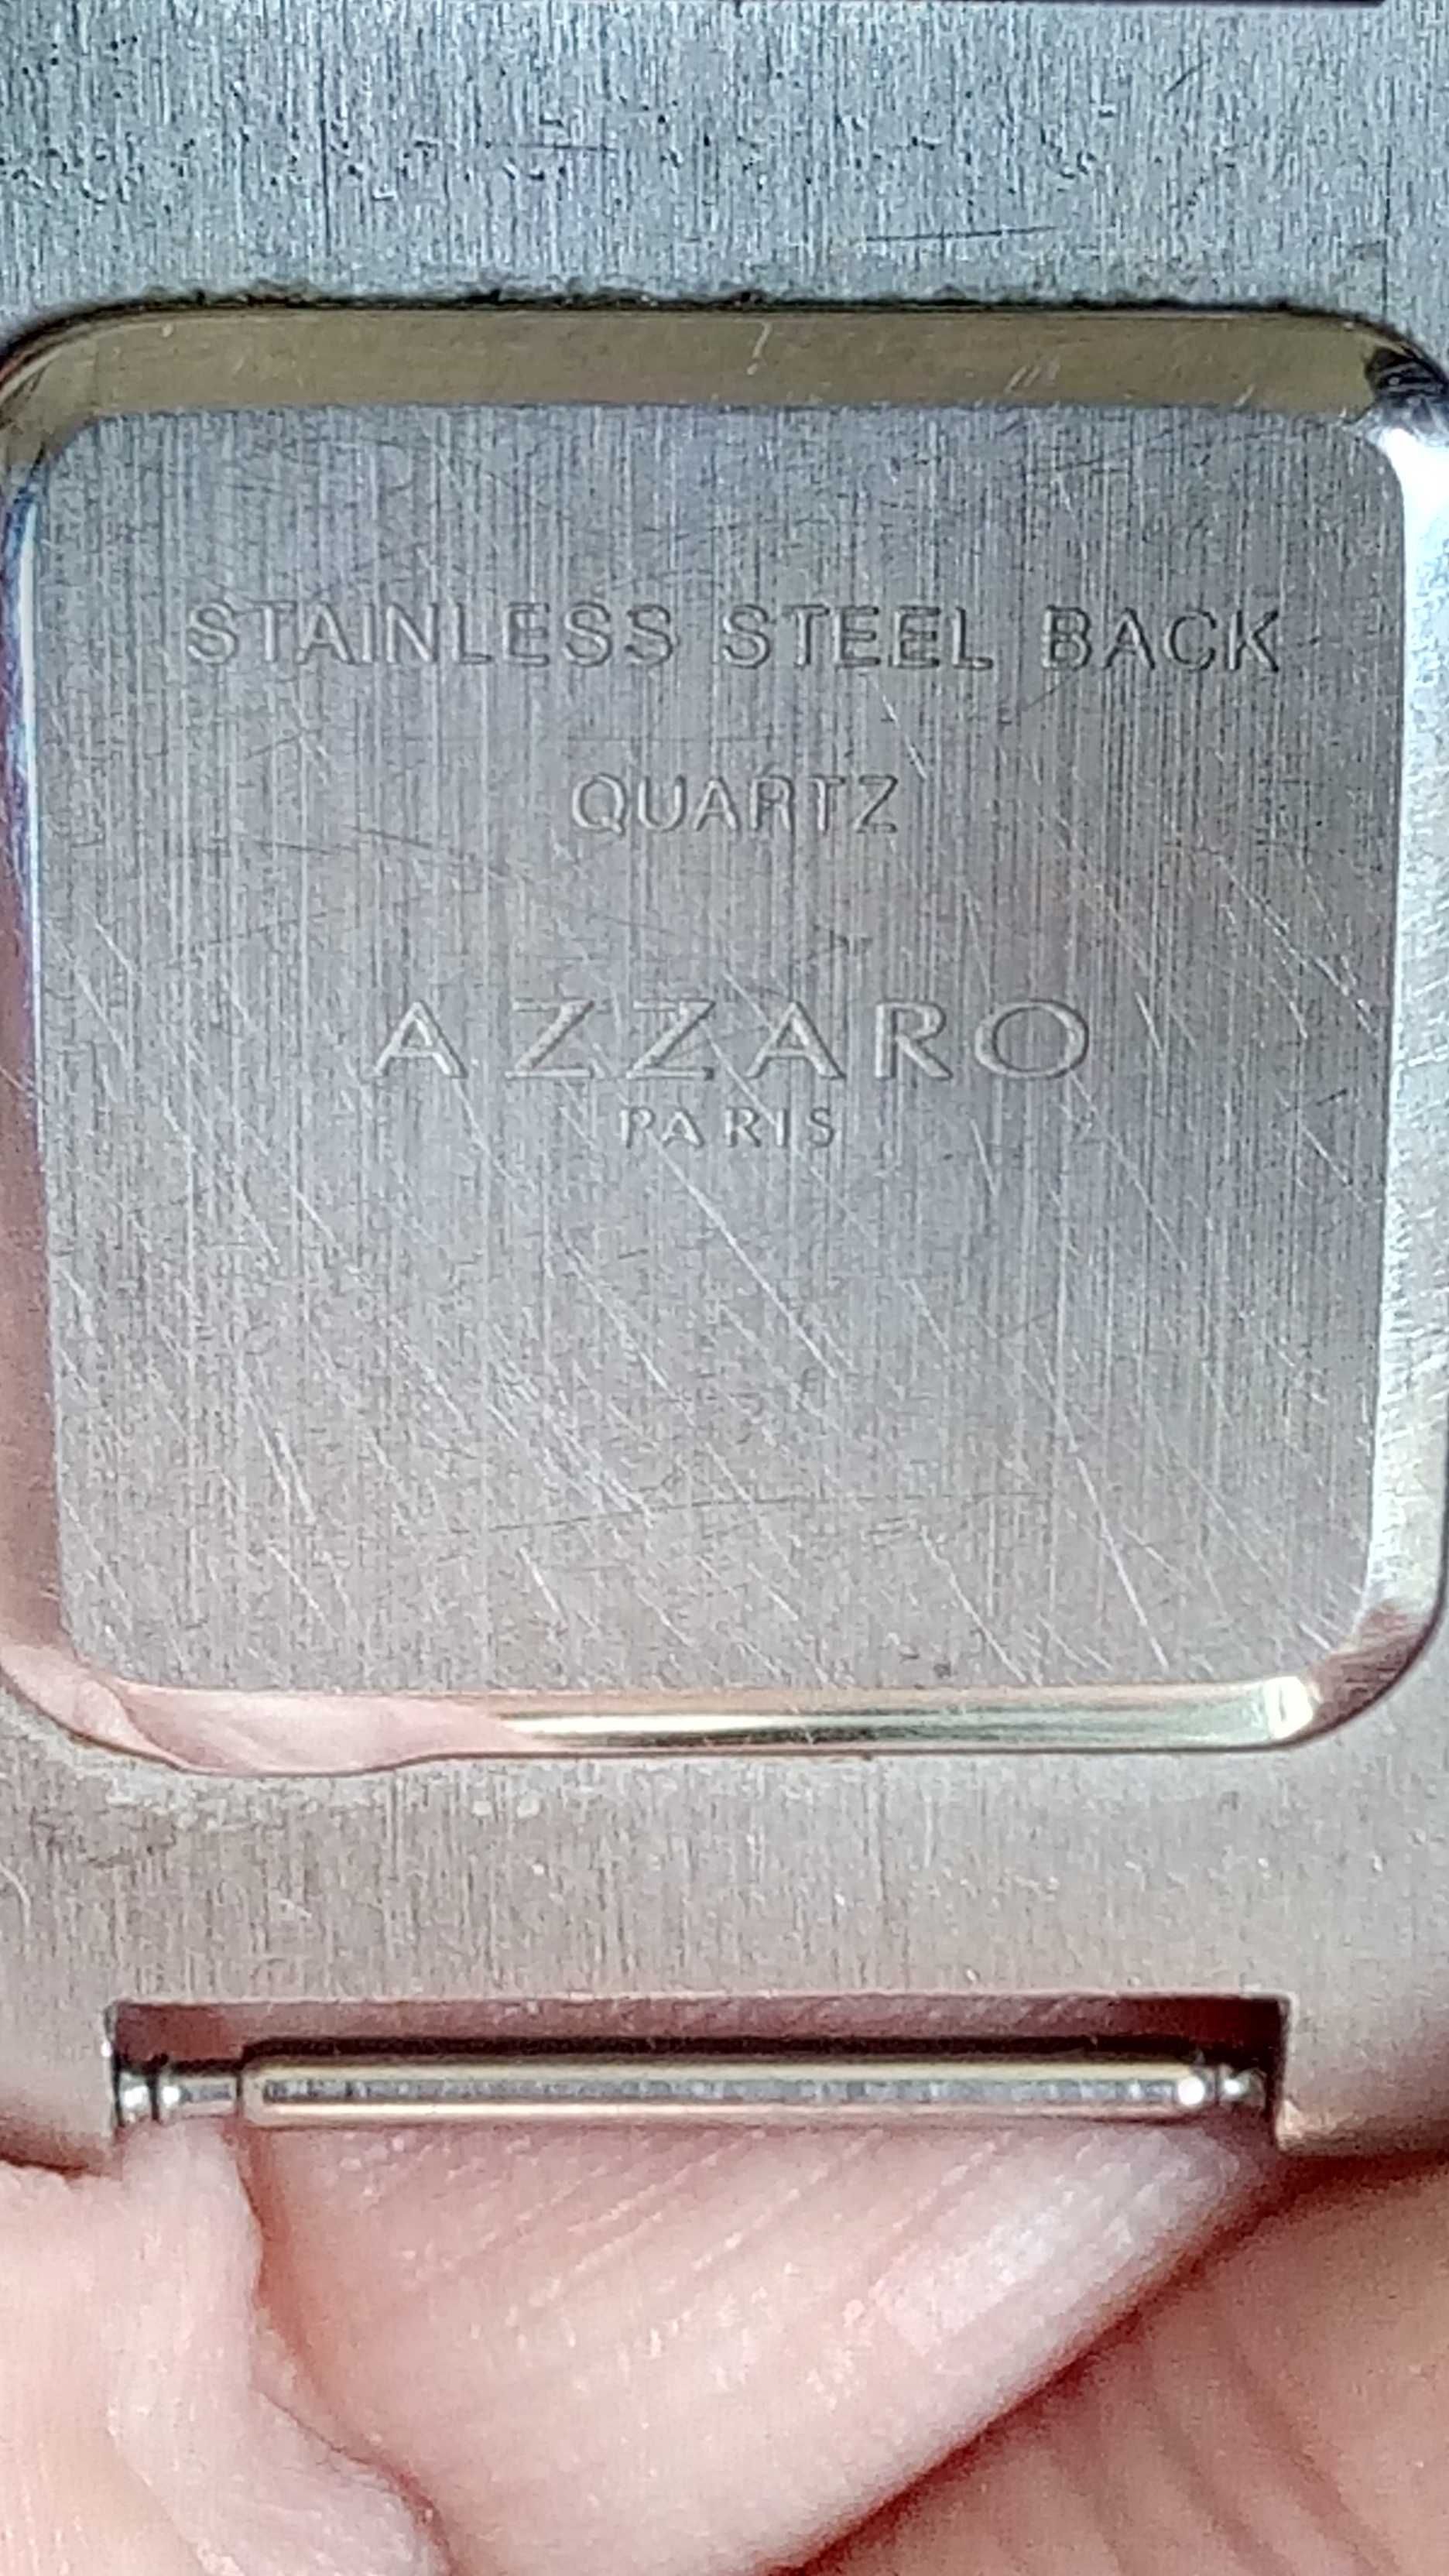 AZZARO, Quartz, Paris (Stainless Steel Back)